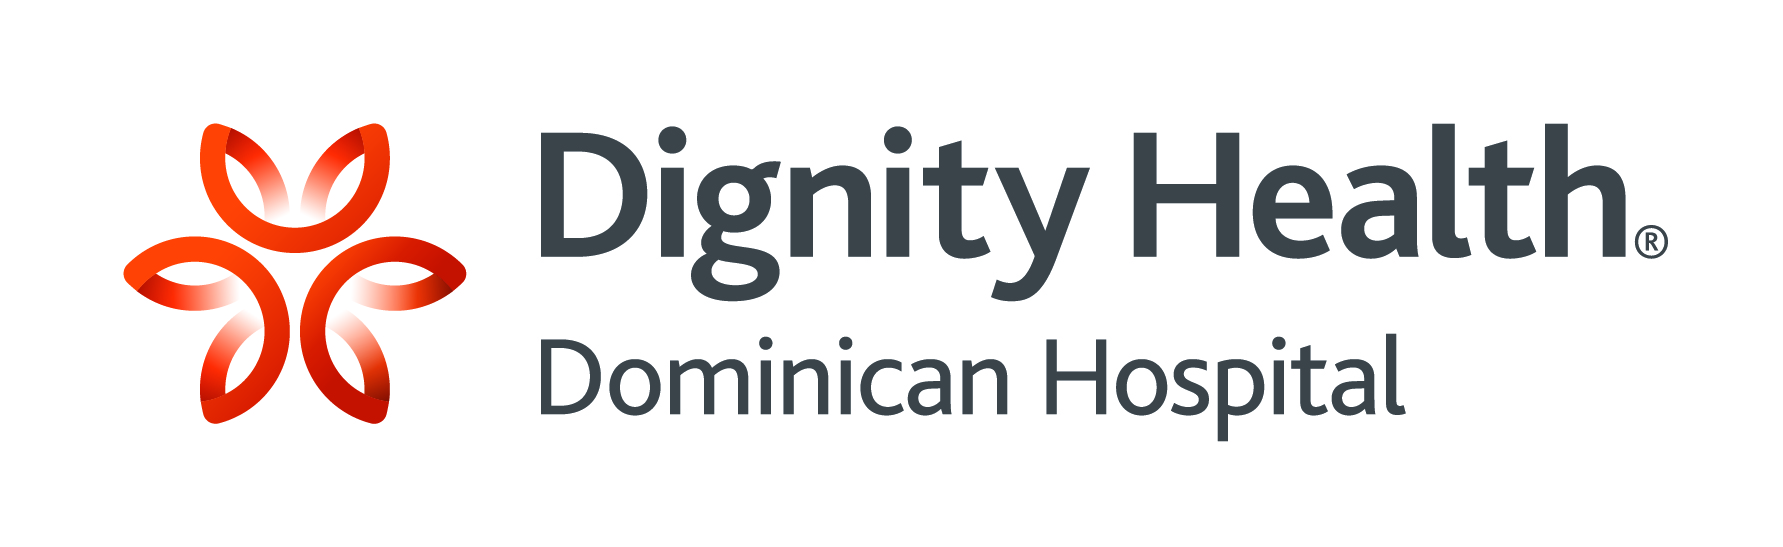 Dignity Health Dominican Hospital logo